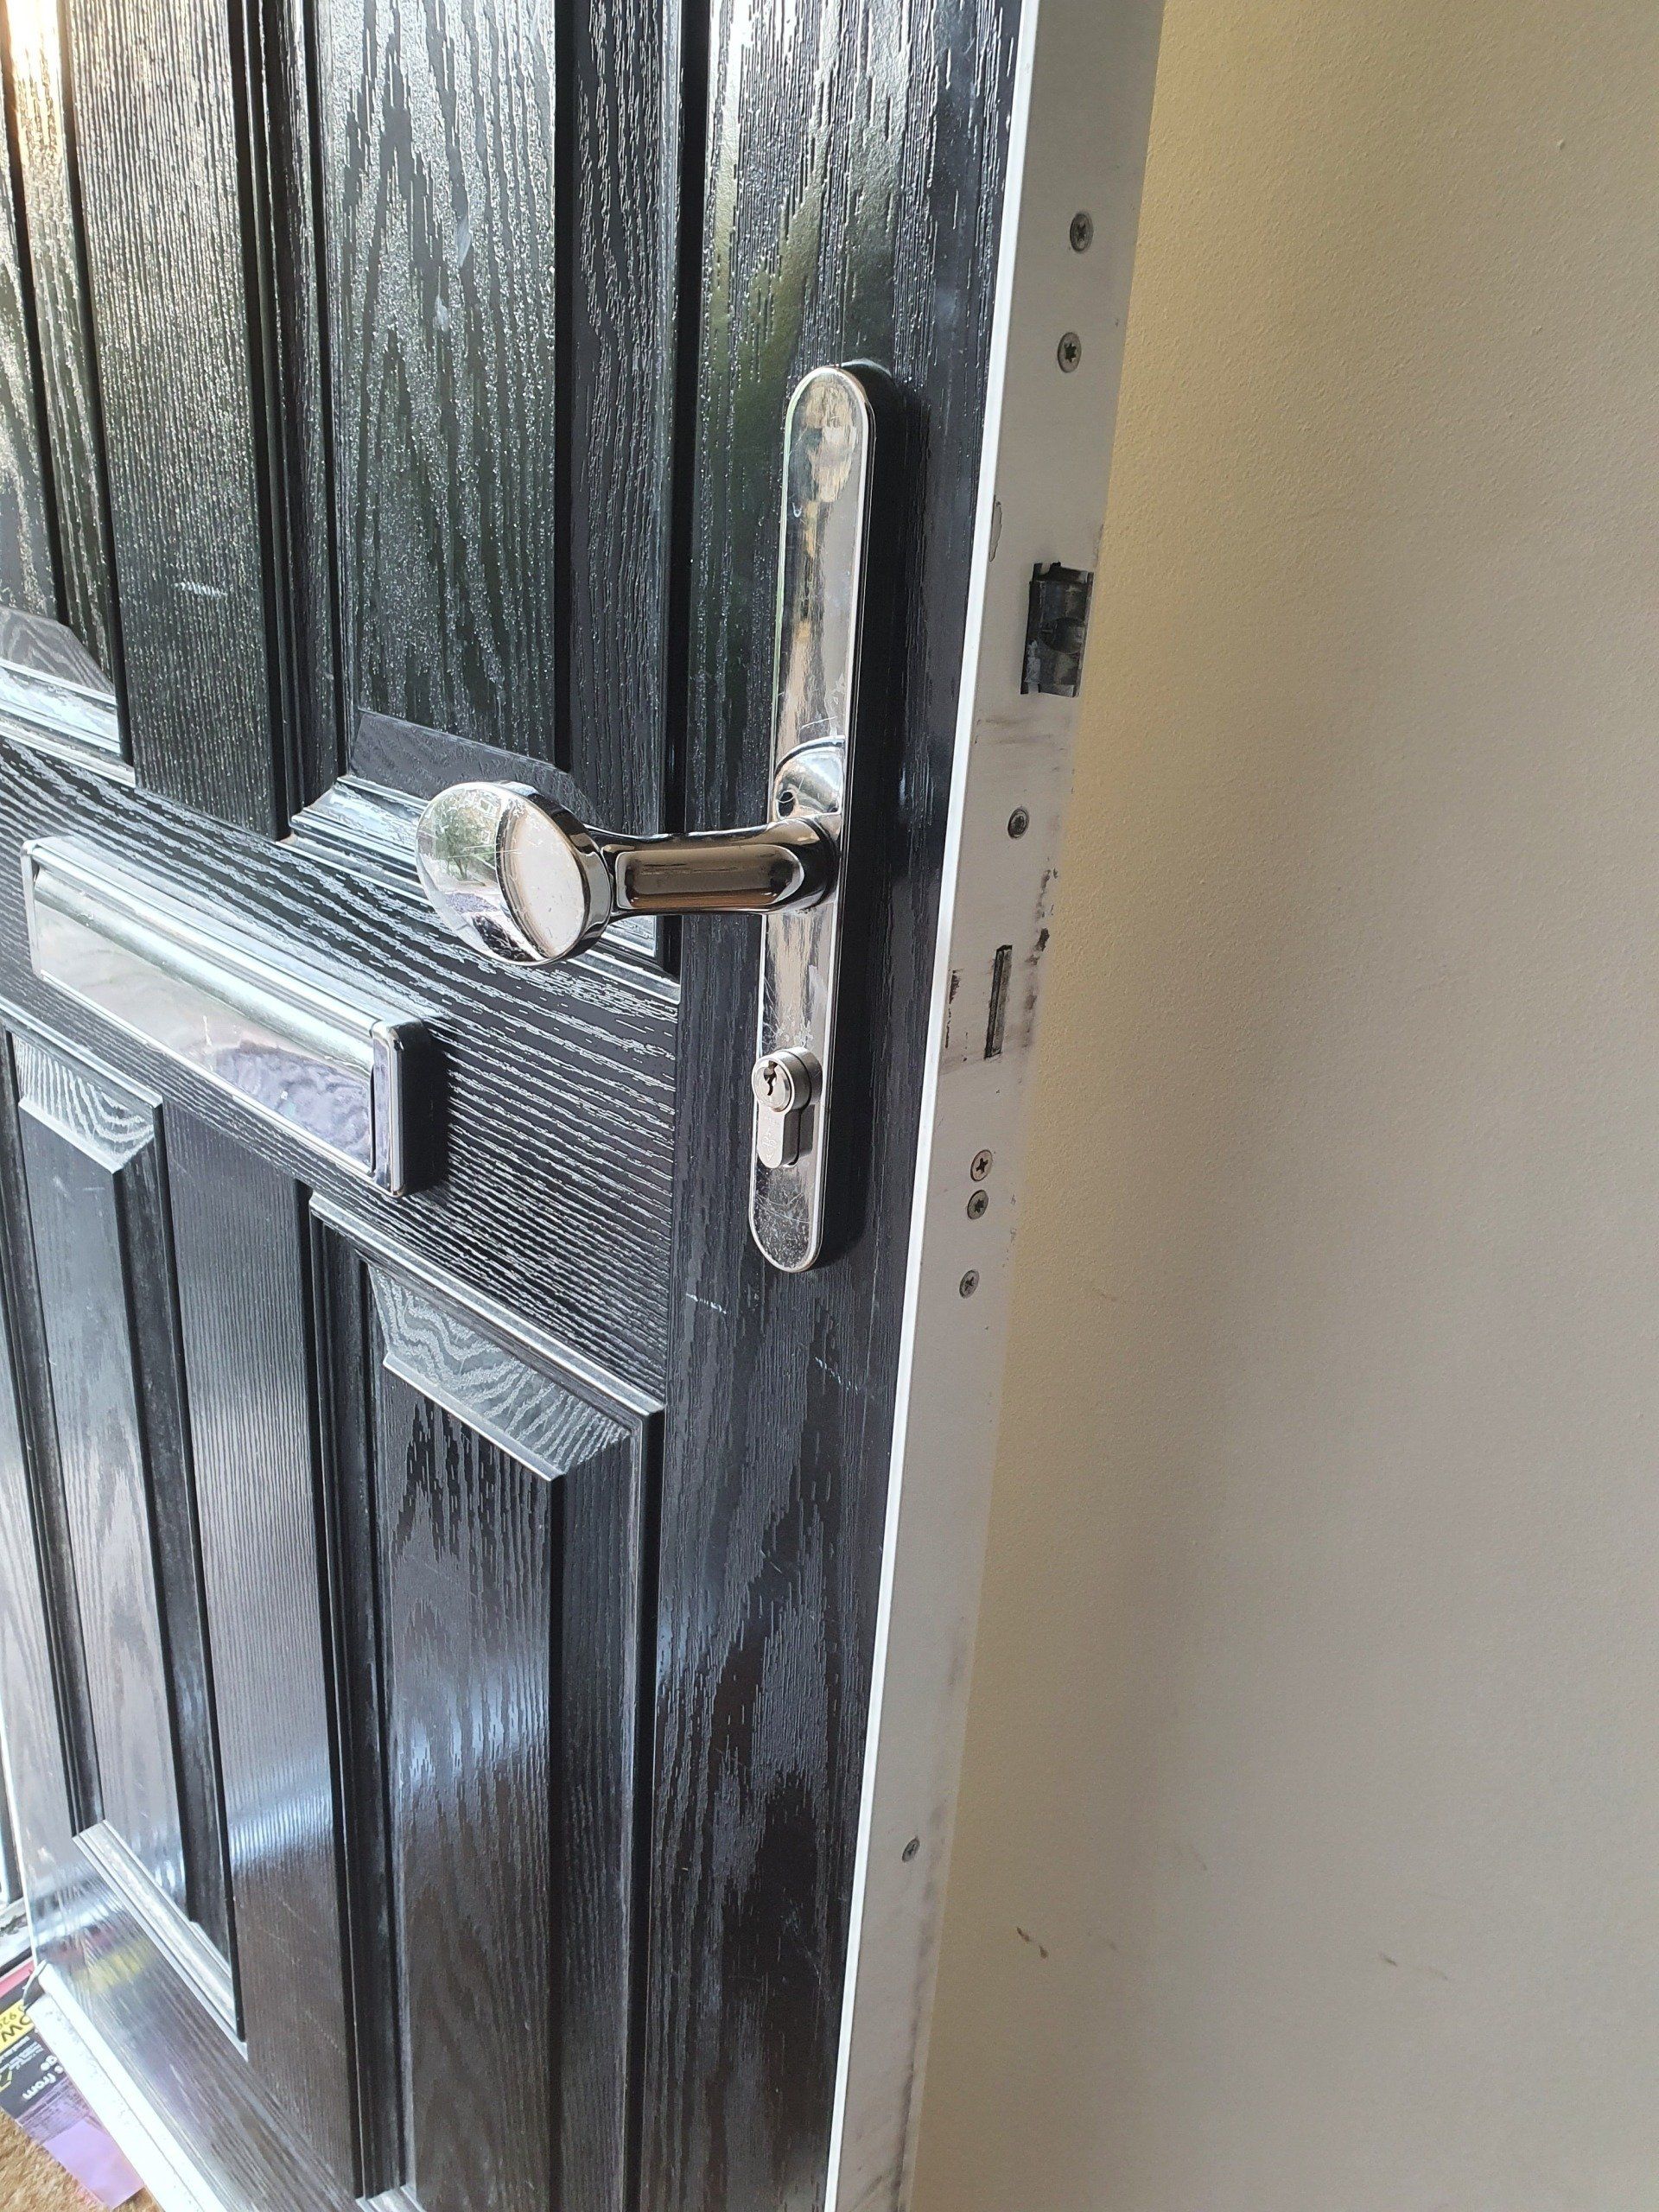 UPVC door locking system